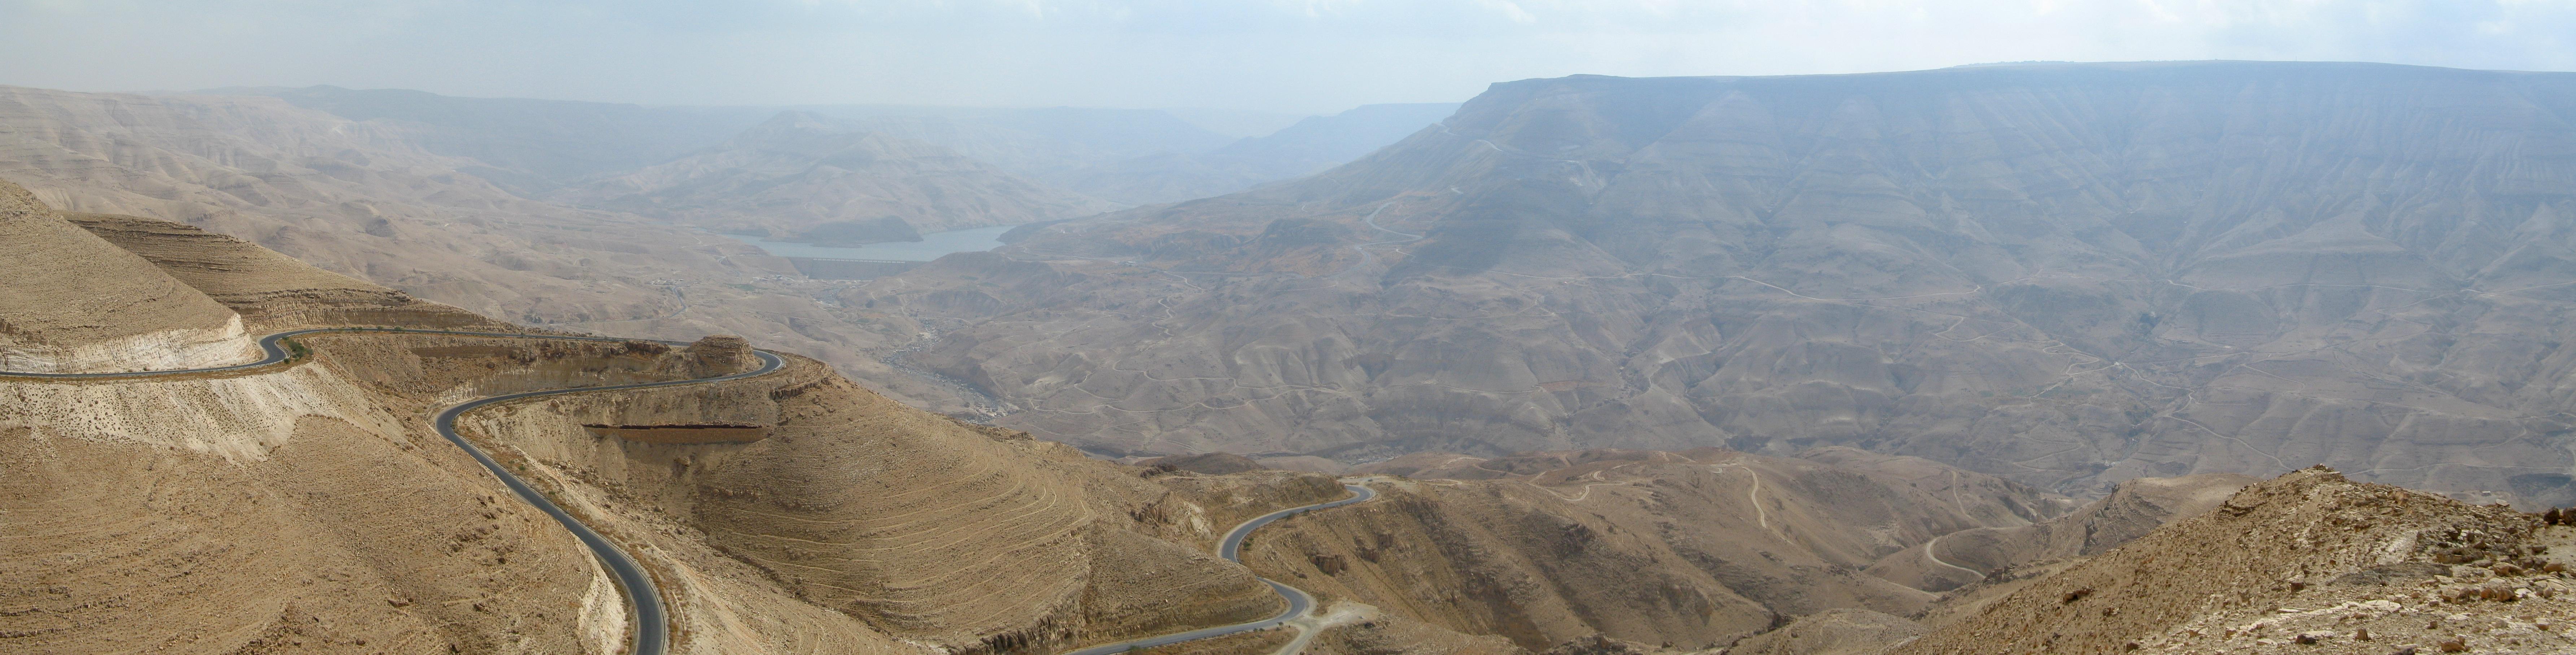 247_4705ff_Wadi_el-Mujib-Panorama1.jpg